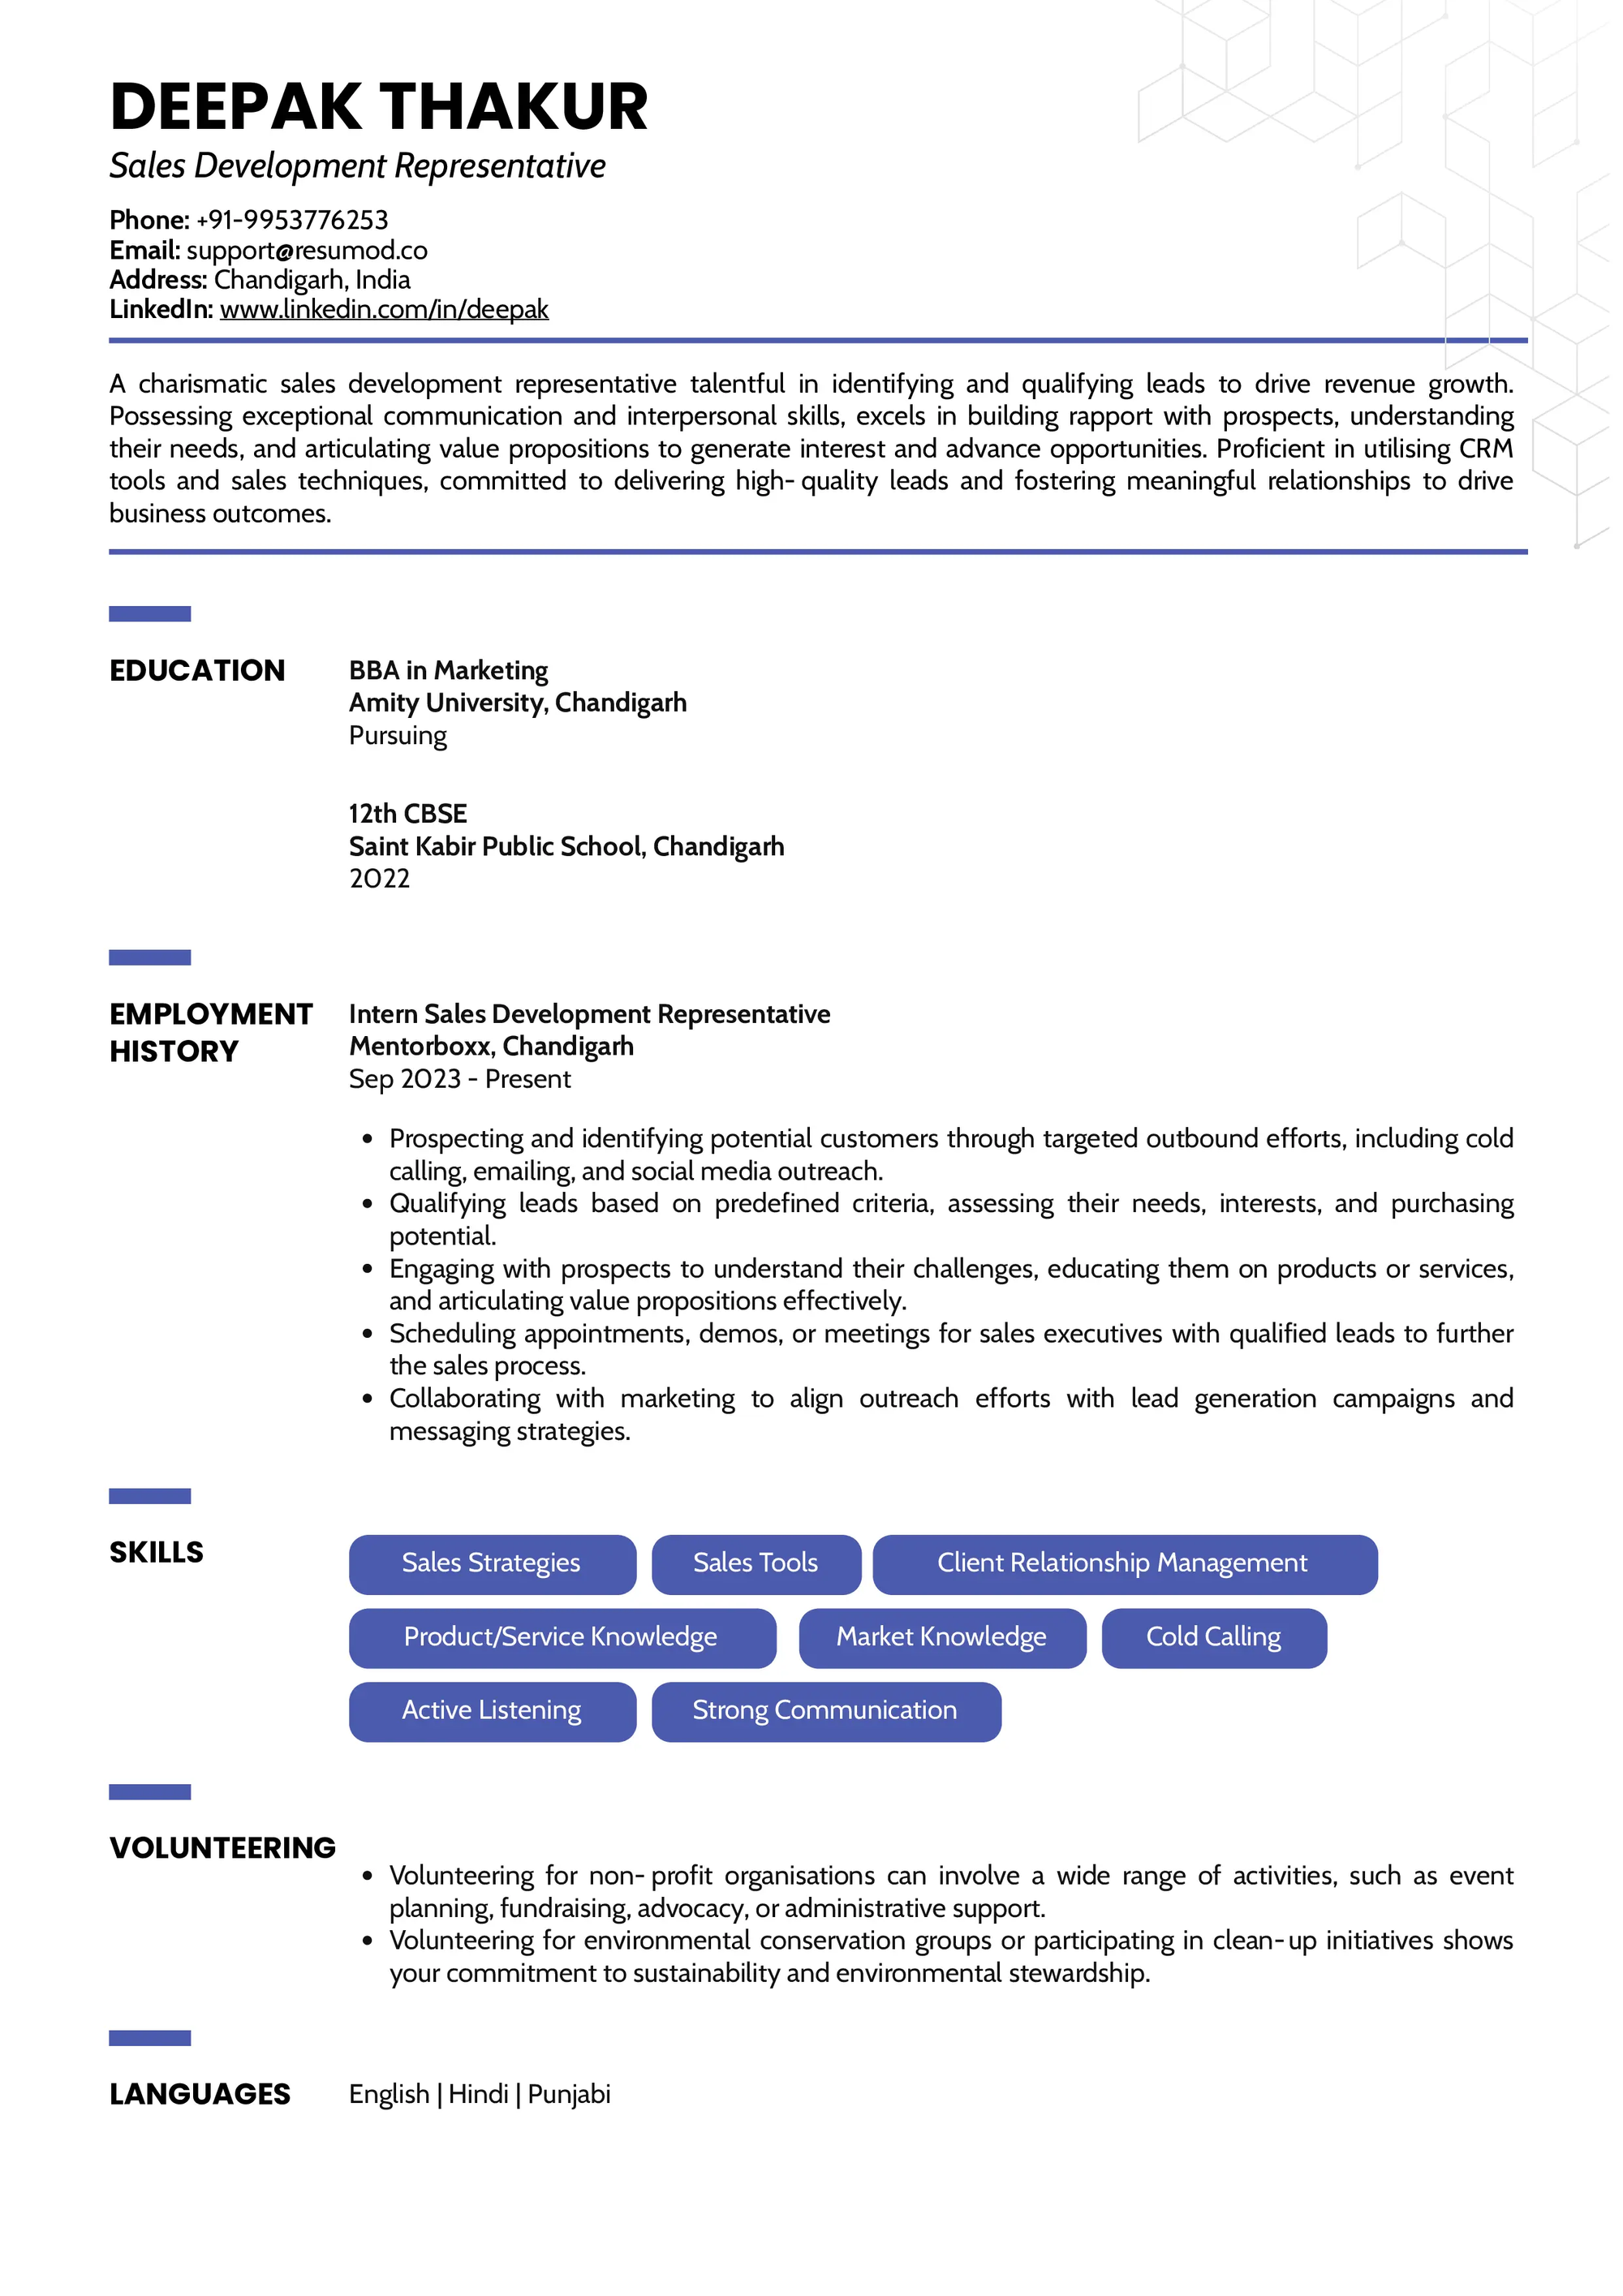 Resume of Sales Development Representative 